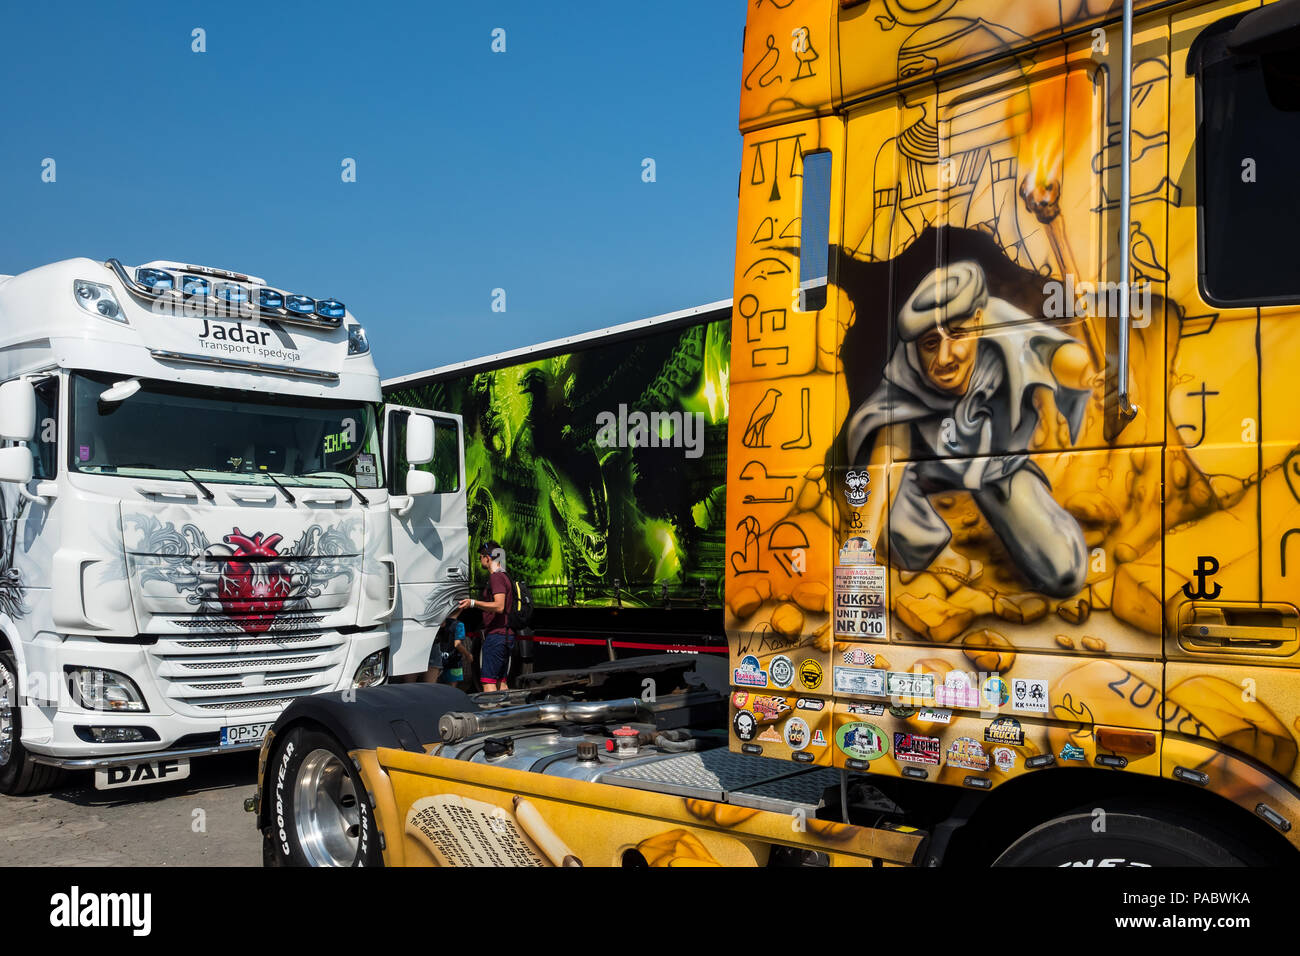 Master Truck Show 20-22.07. 2018 Poland , Opole, Polska Nowa Wieś. Truck cab painted with ancient Egyptian symbols Stock Photo